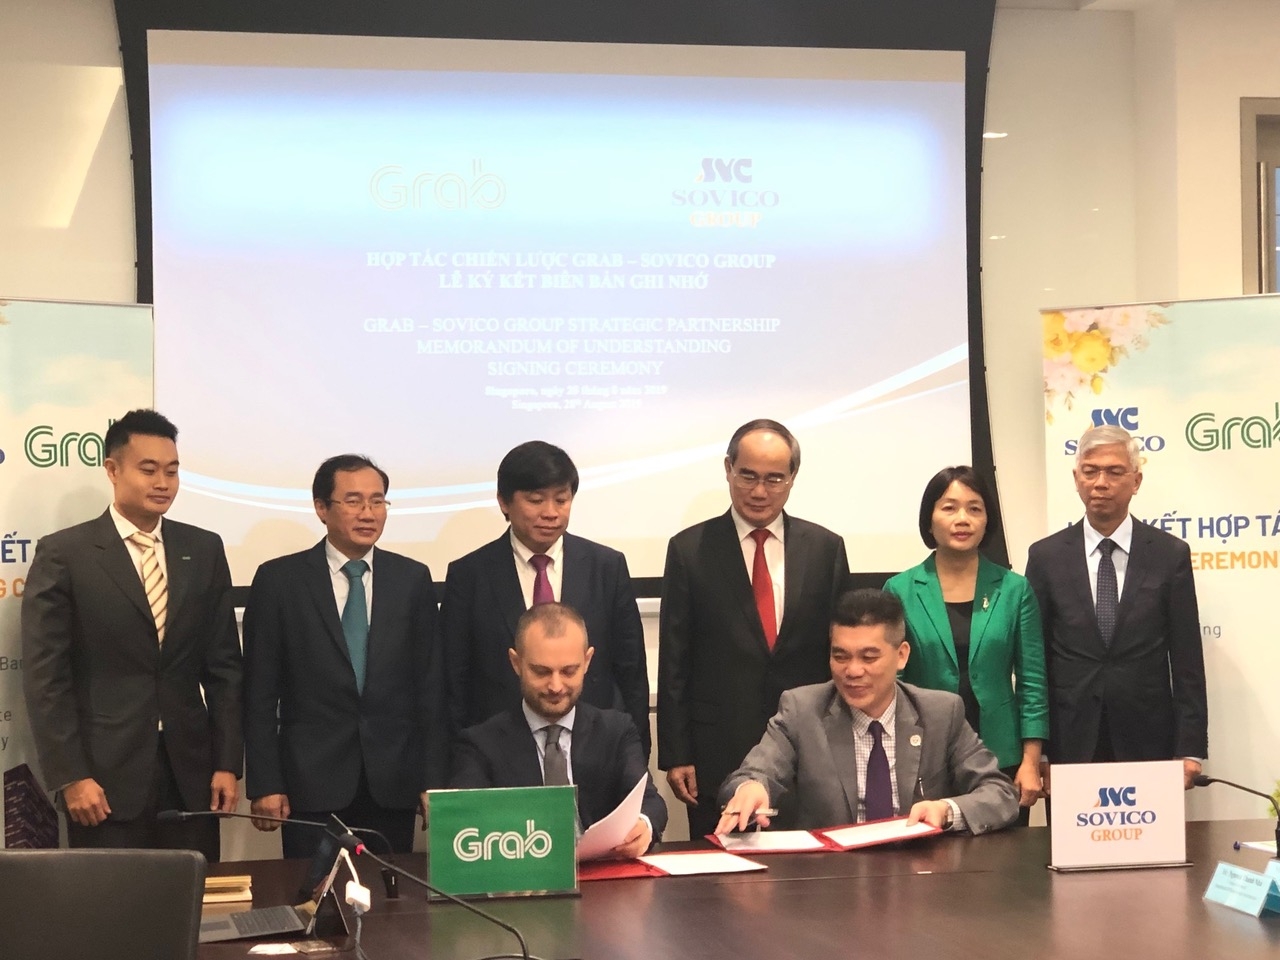 Grab and Sovico Group sign comprehensive strategic partnership